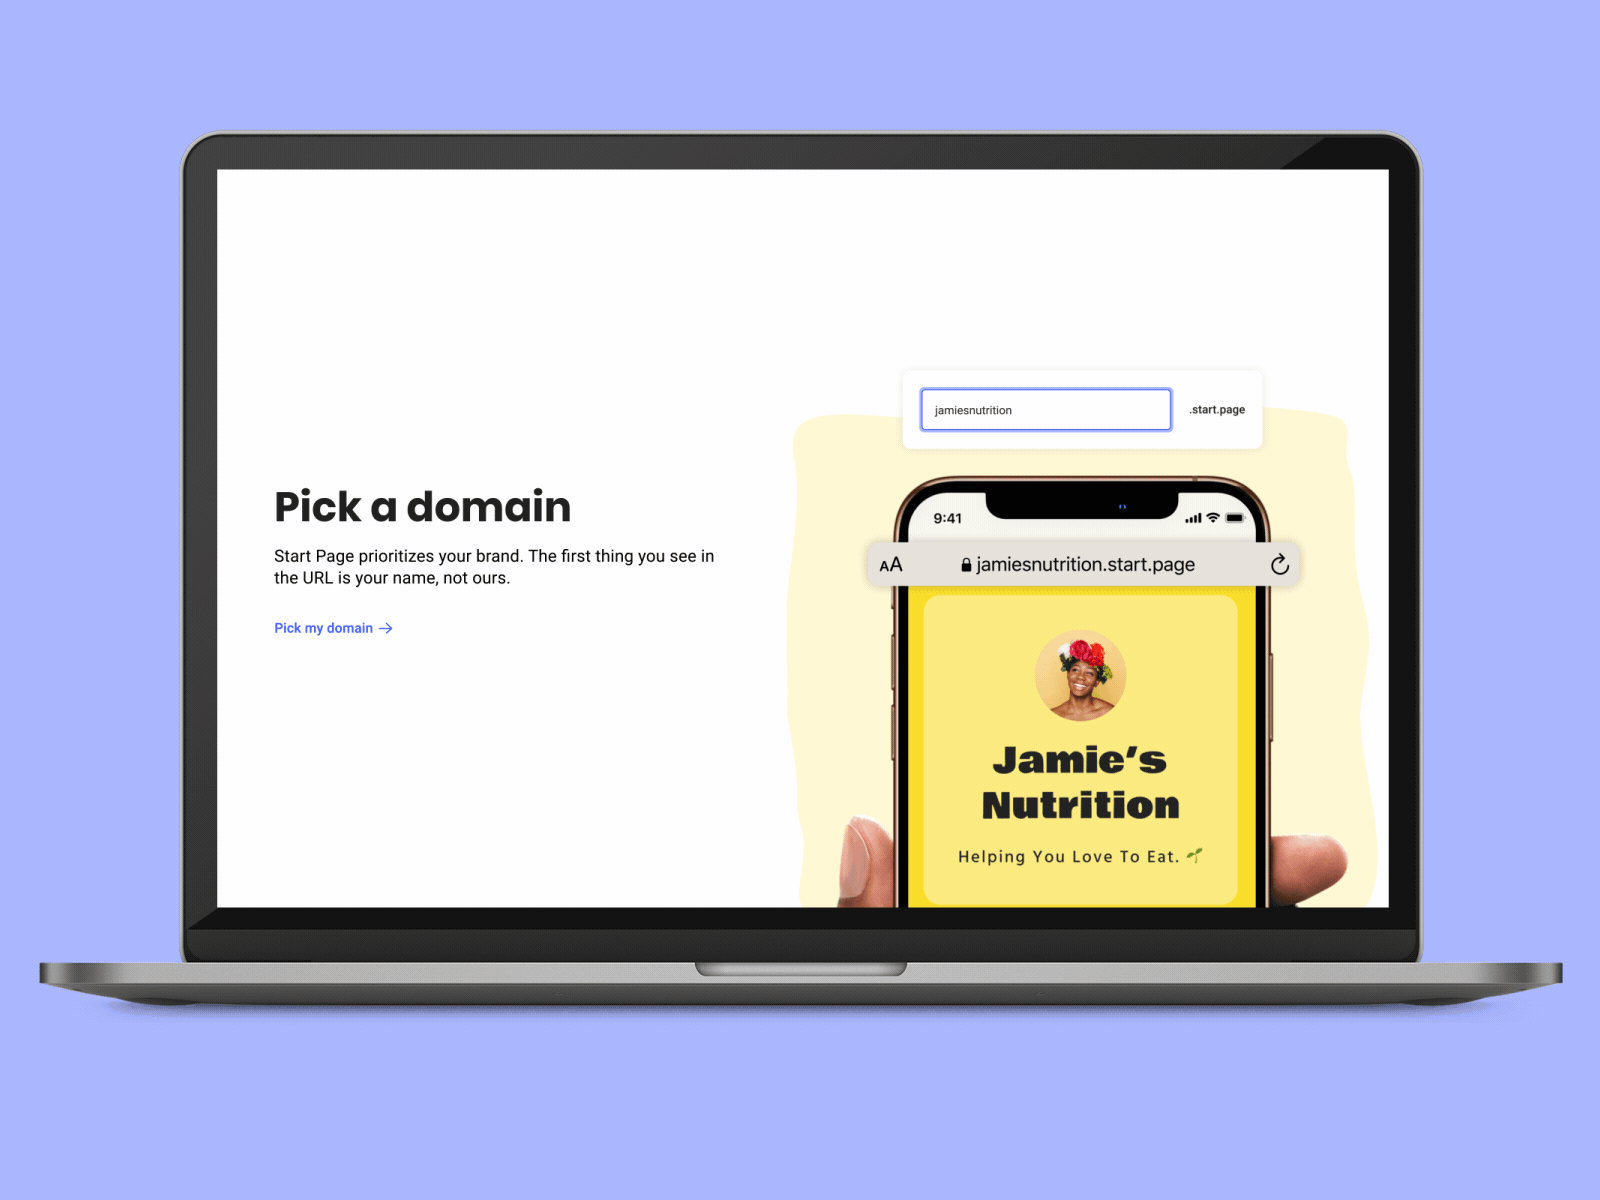 Pick a domain - Start Page by Buffer